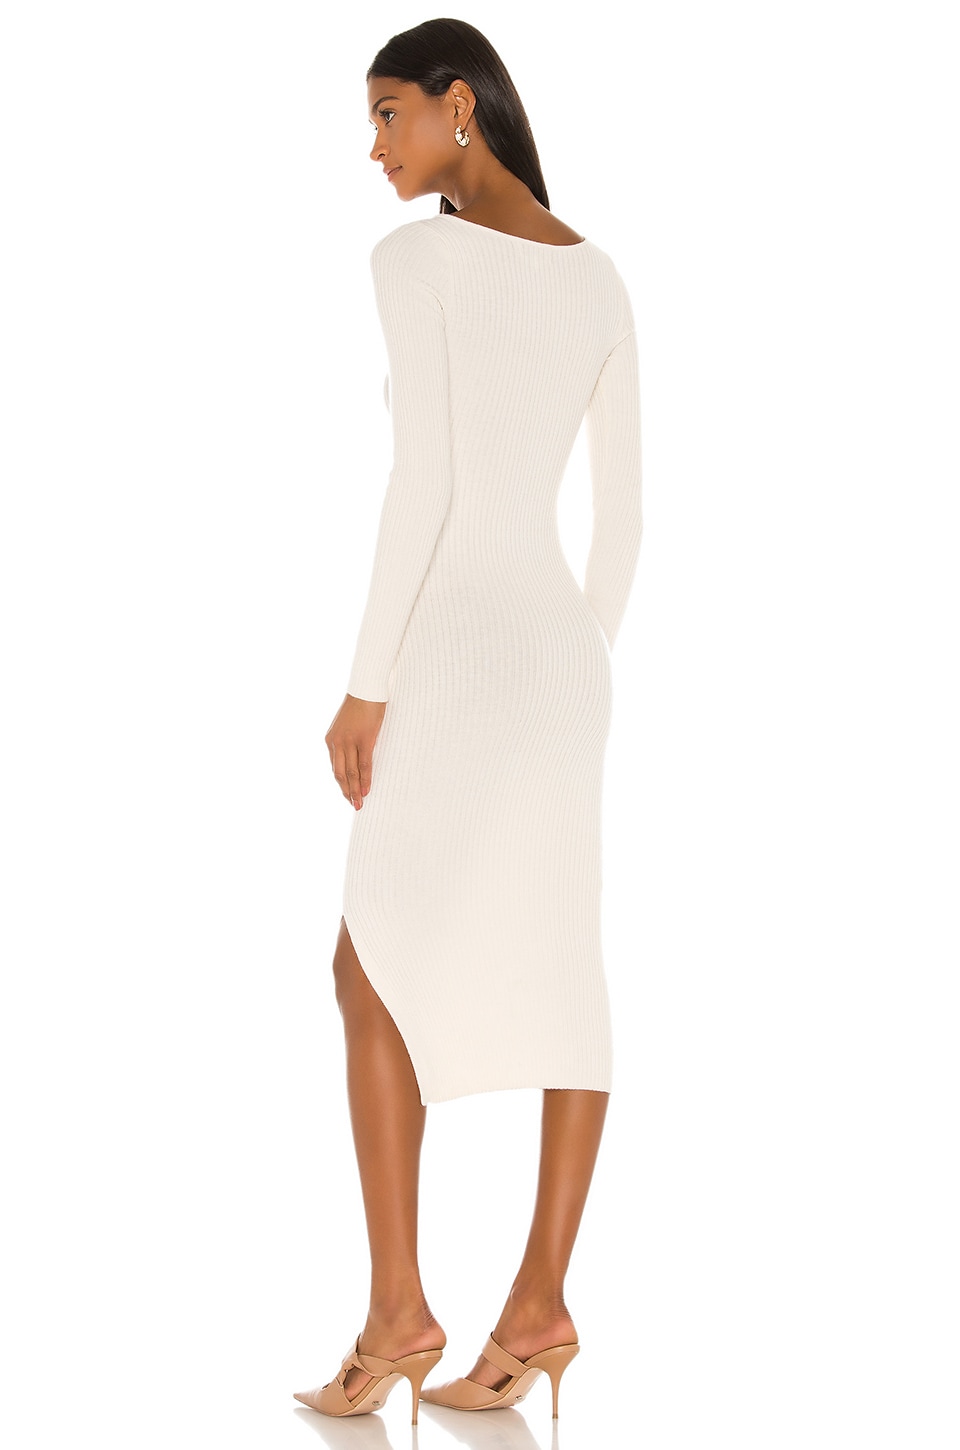 L'Academie Nessa Sweater Dress in Cream | REVOLVE